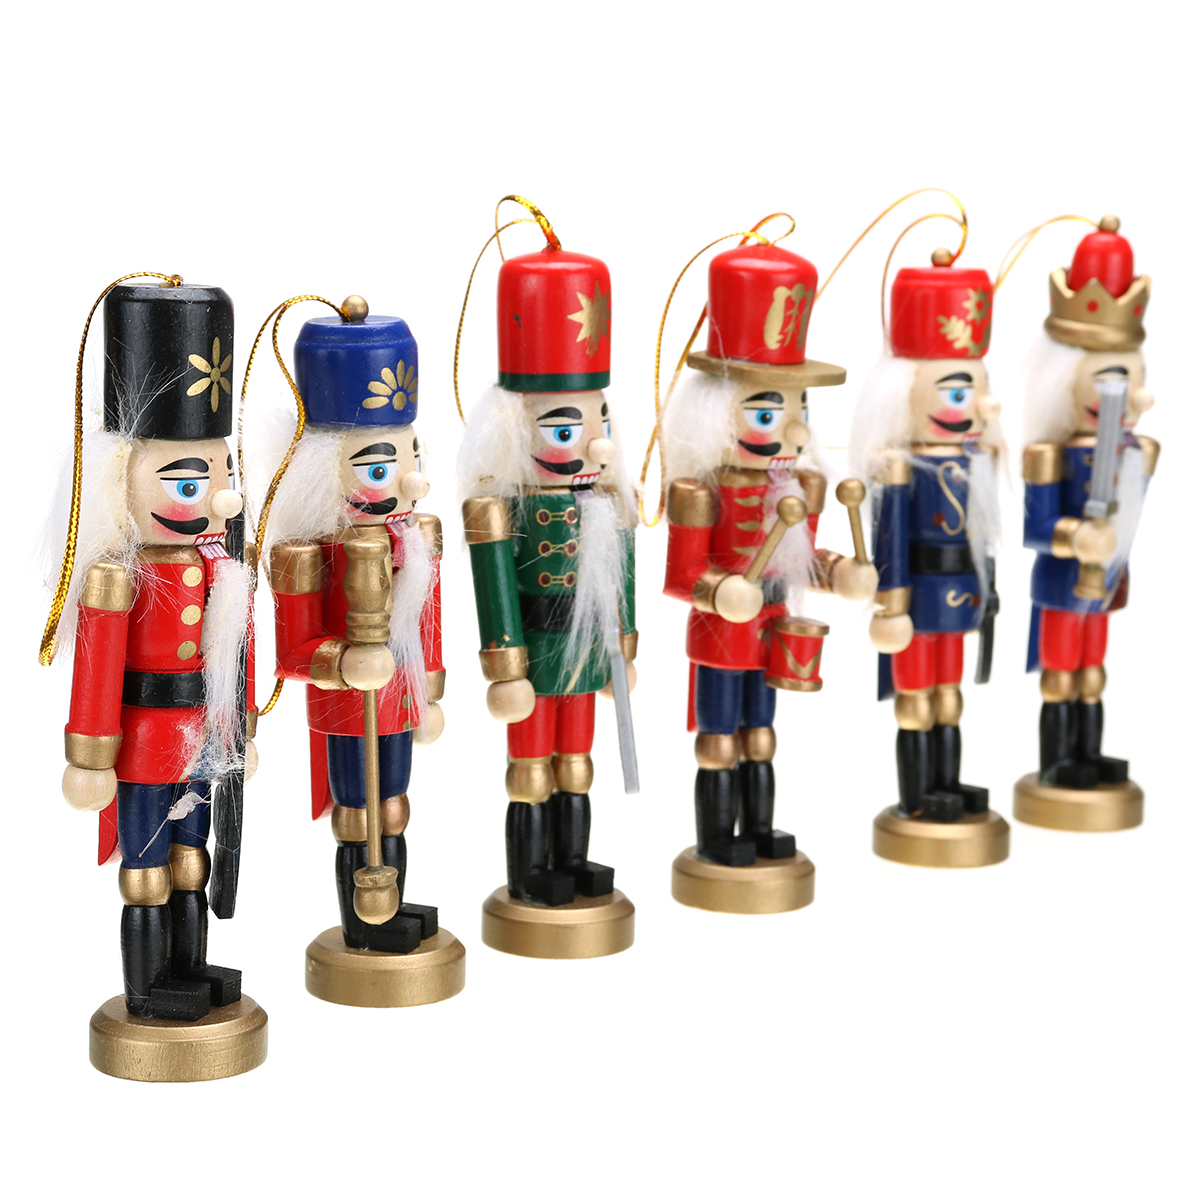 Wooden-Nutcracker-Doll-Soldier-Vintage-Handcraft-Decoration-Christmas-Gifts-1787904-6